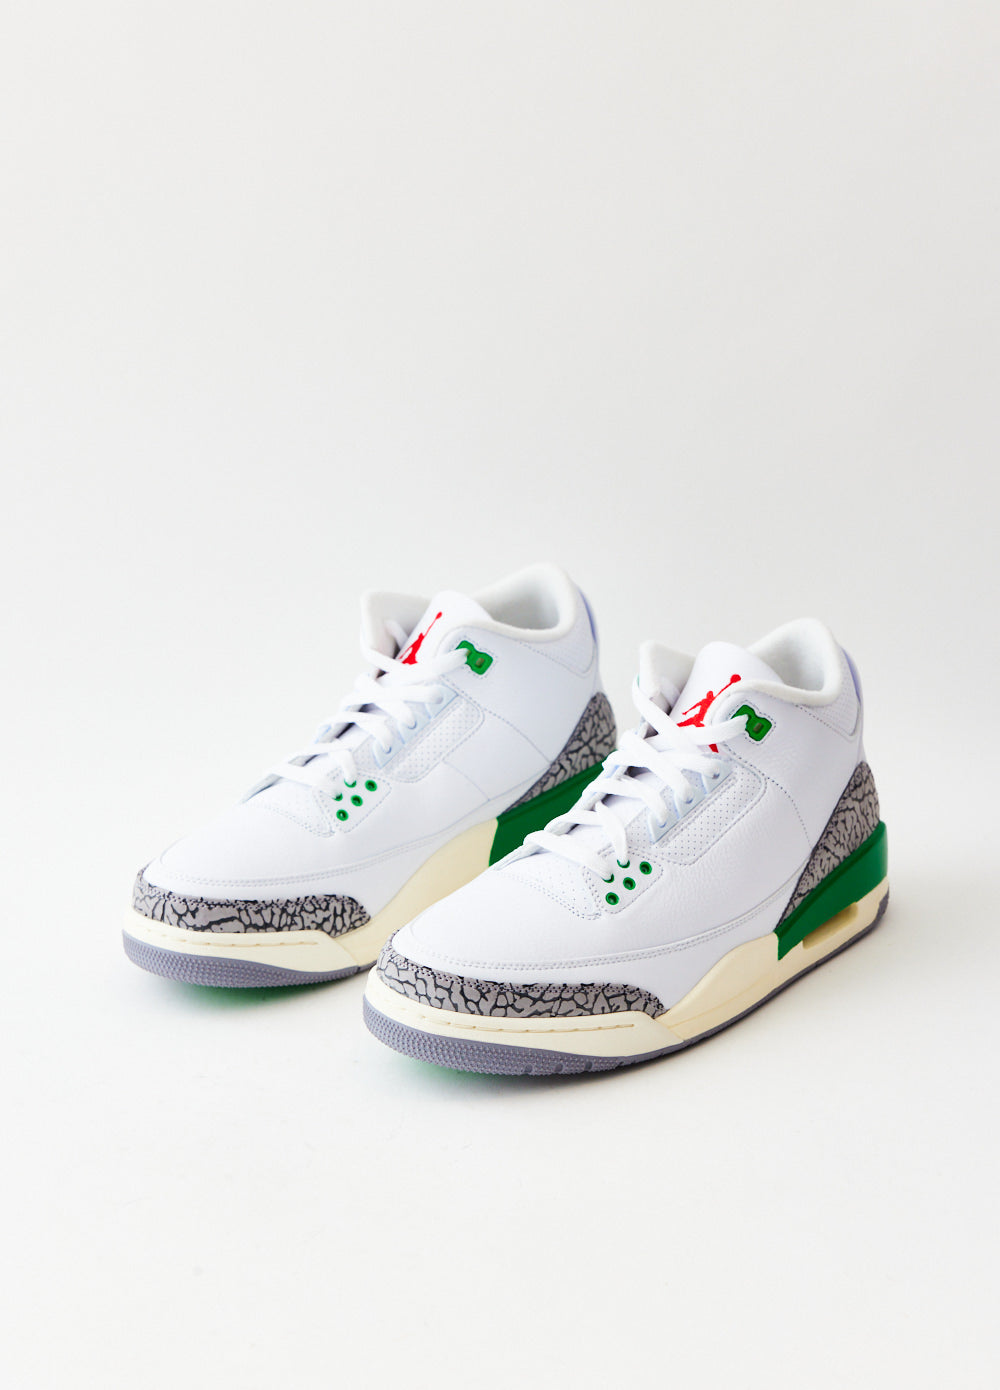 Women's Air Jordan 3 Retro 'Lucky Green' Sneakers